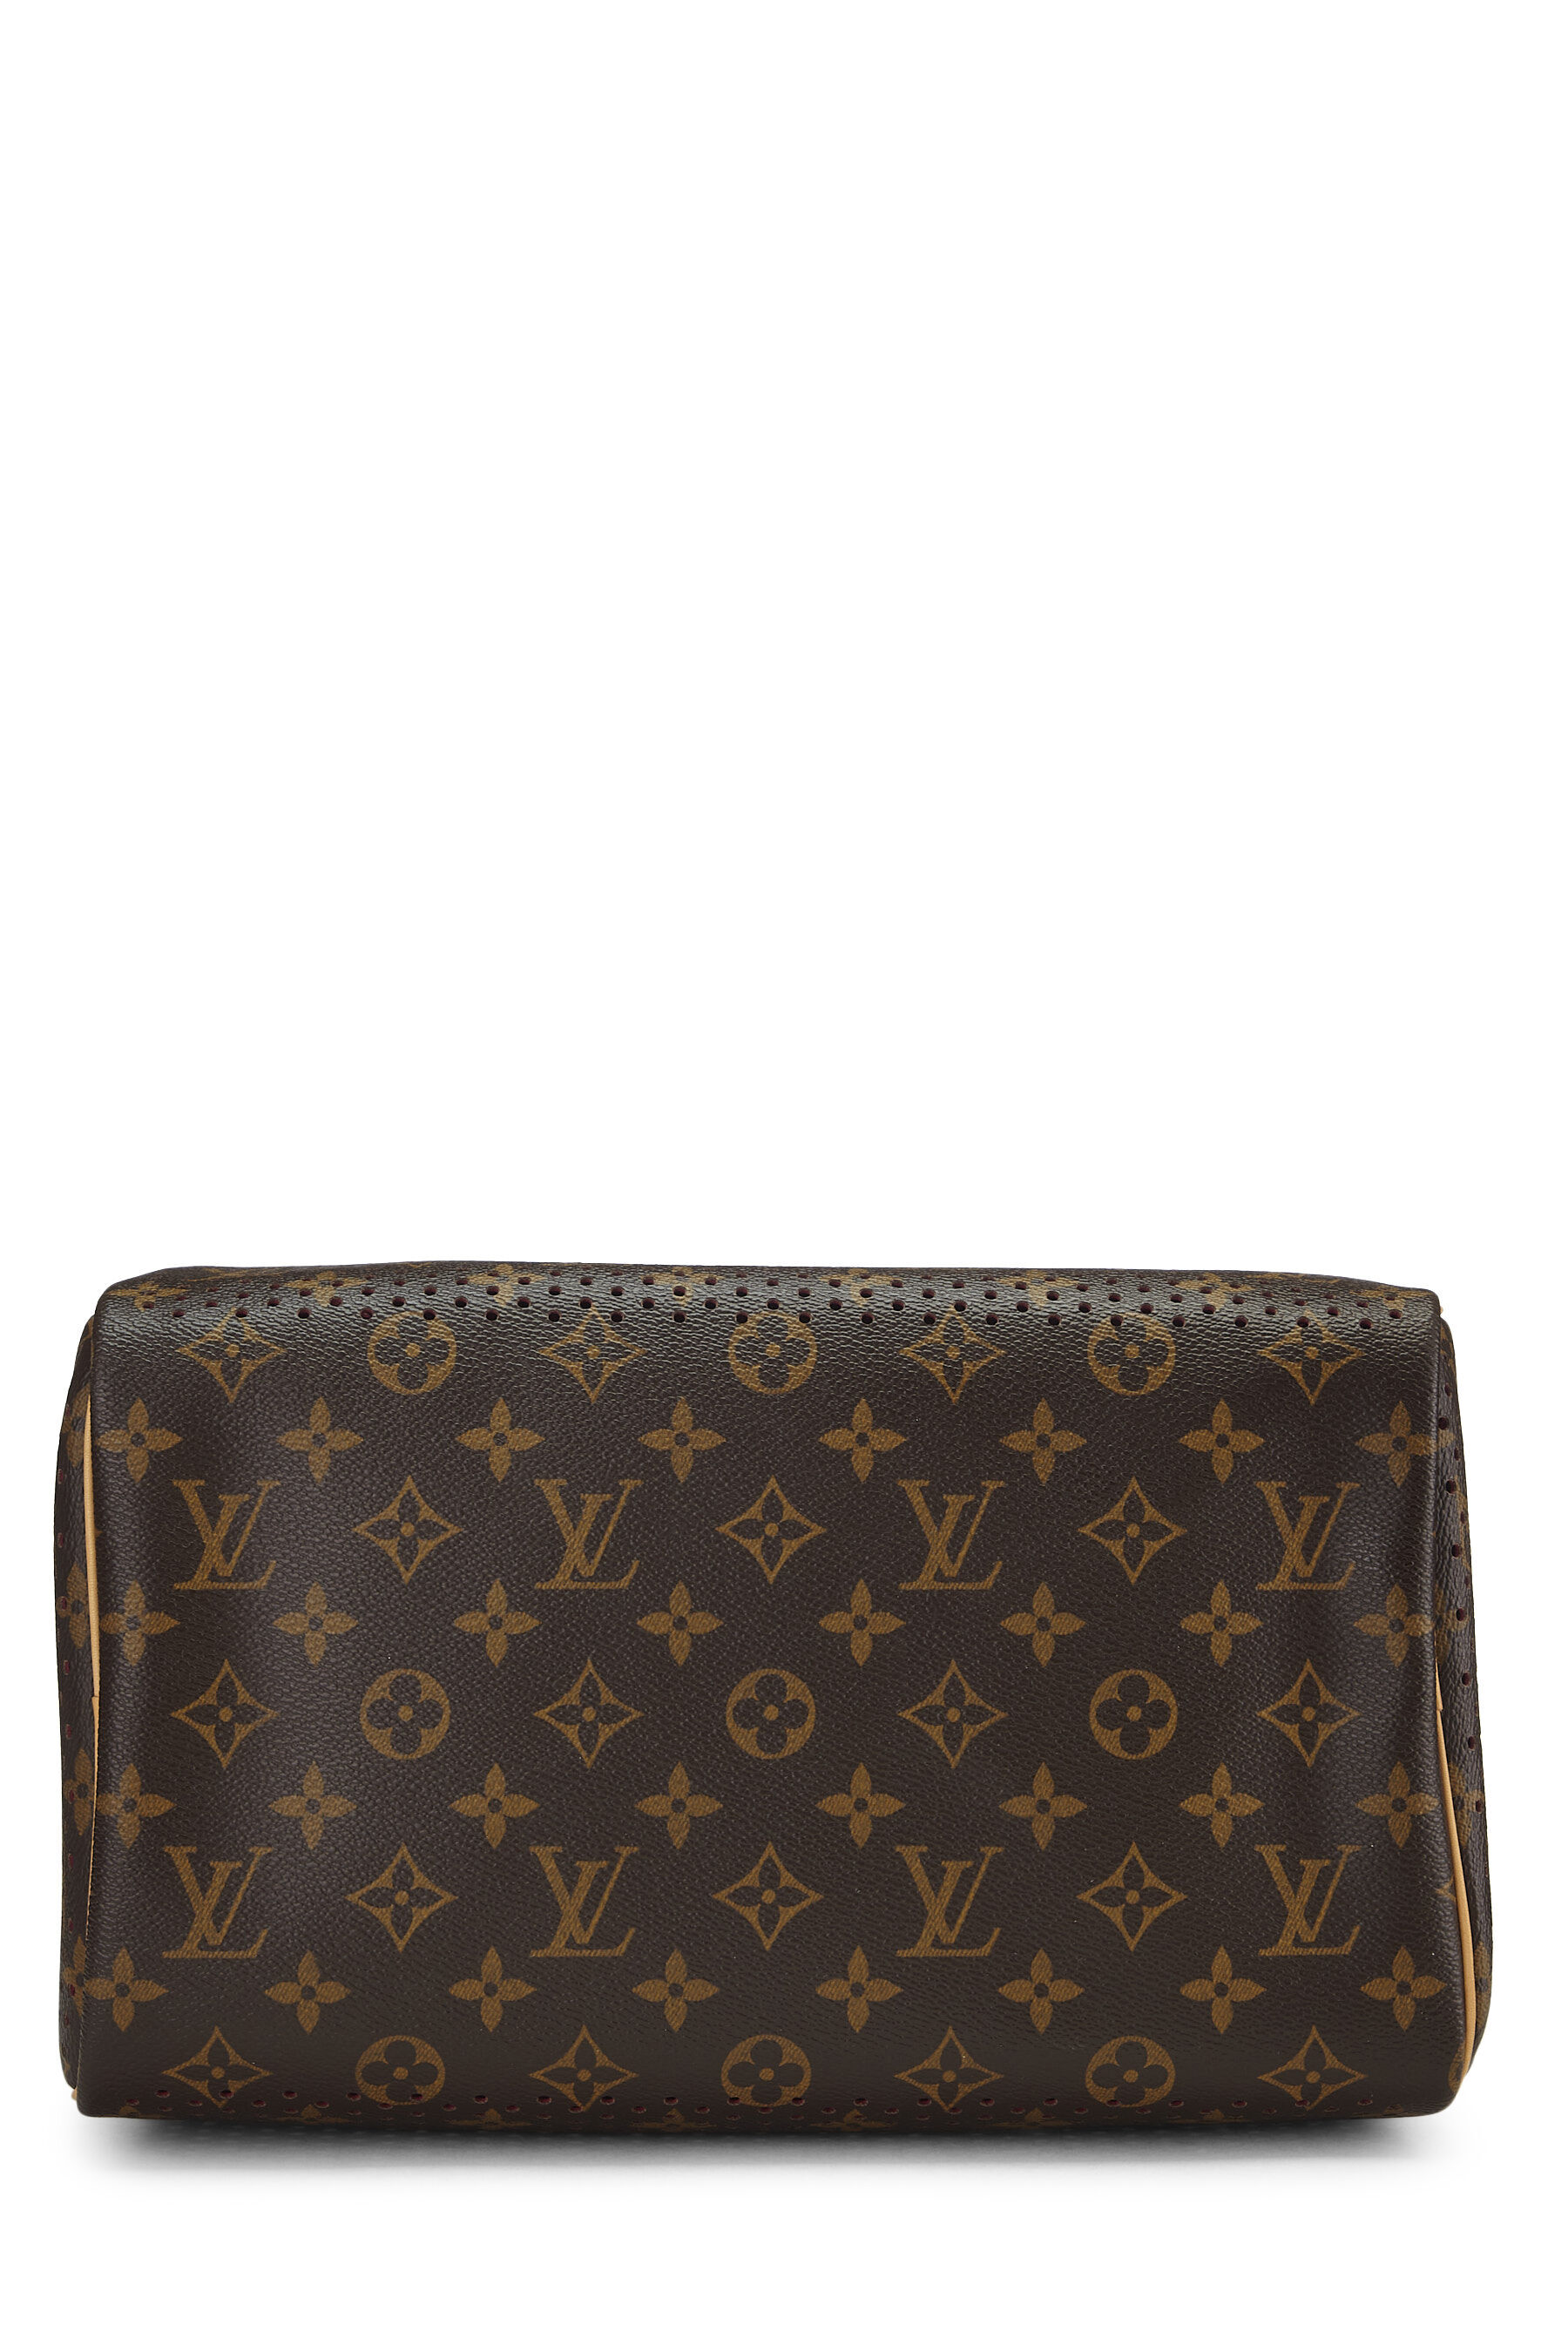 Louis Vuitton speedy 30 with wallet